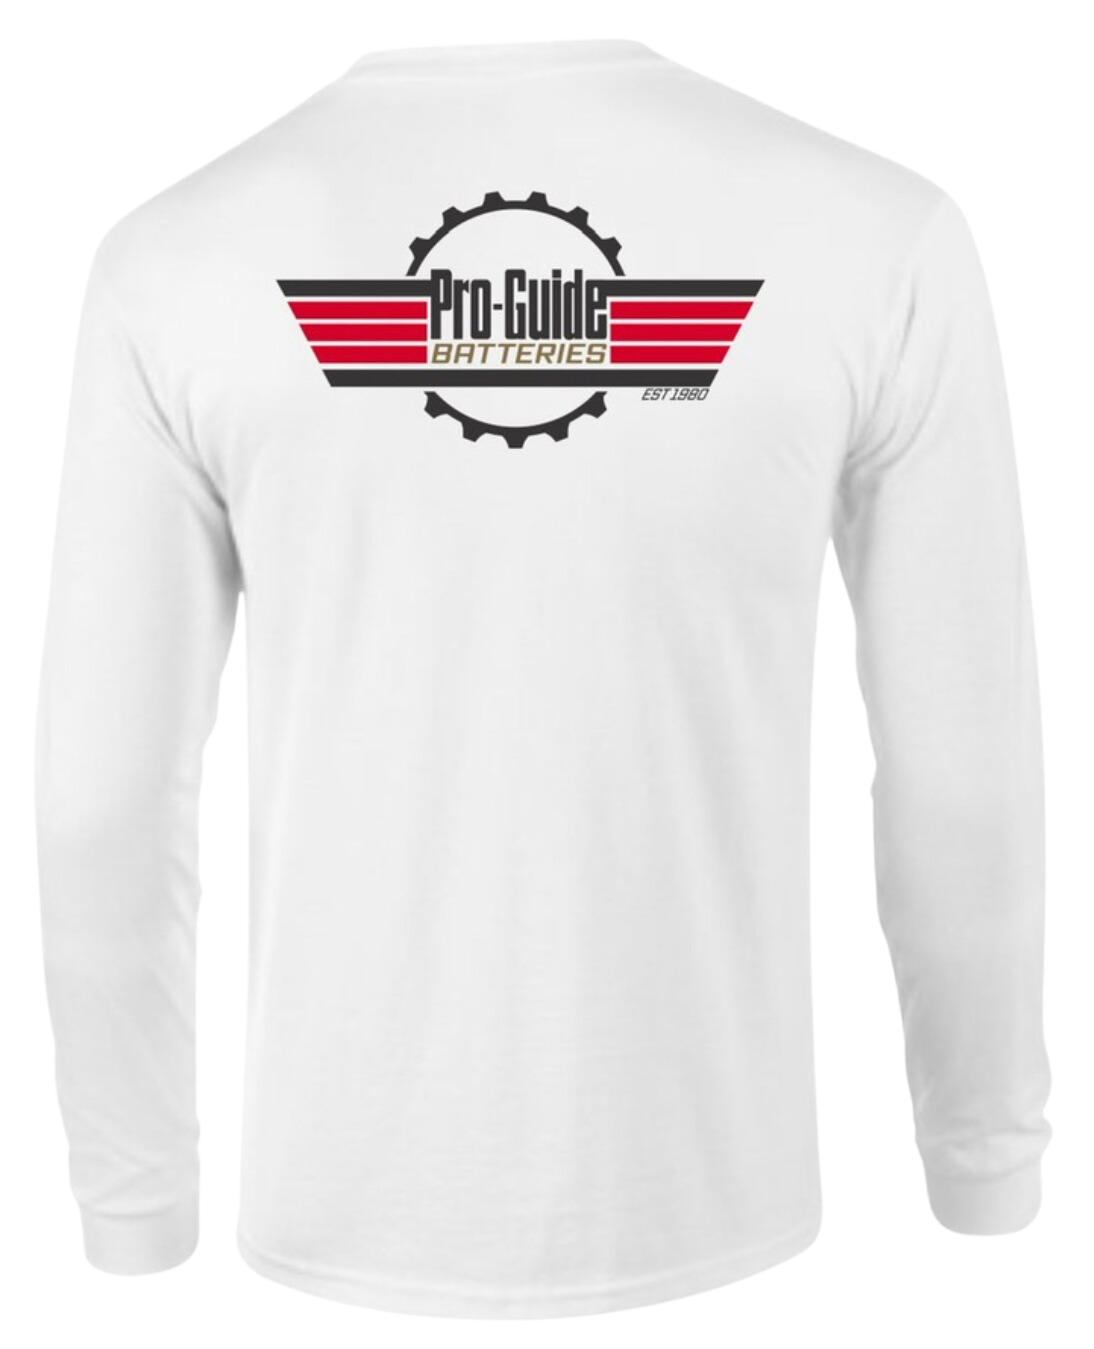 Pro-Guide "Top Gun" Long Sleeve Pocket Shirt